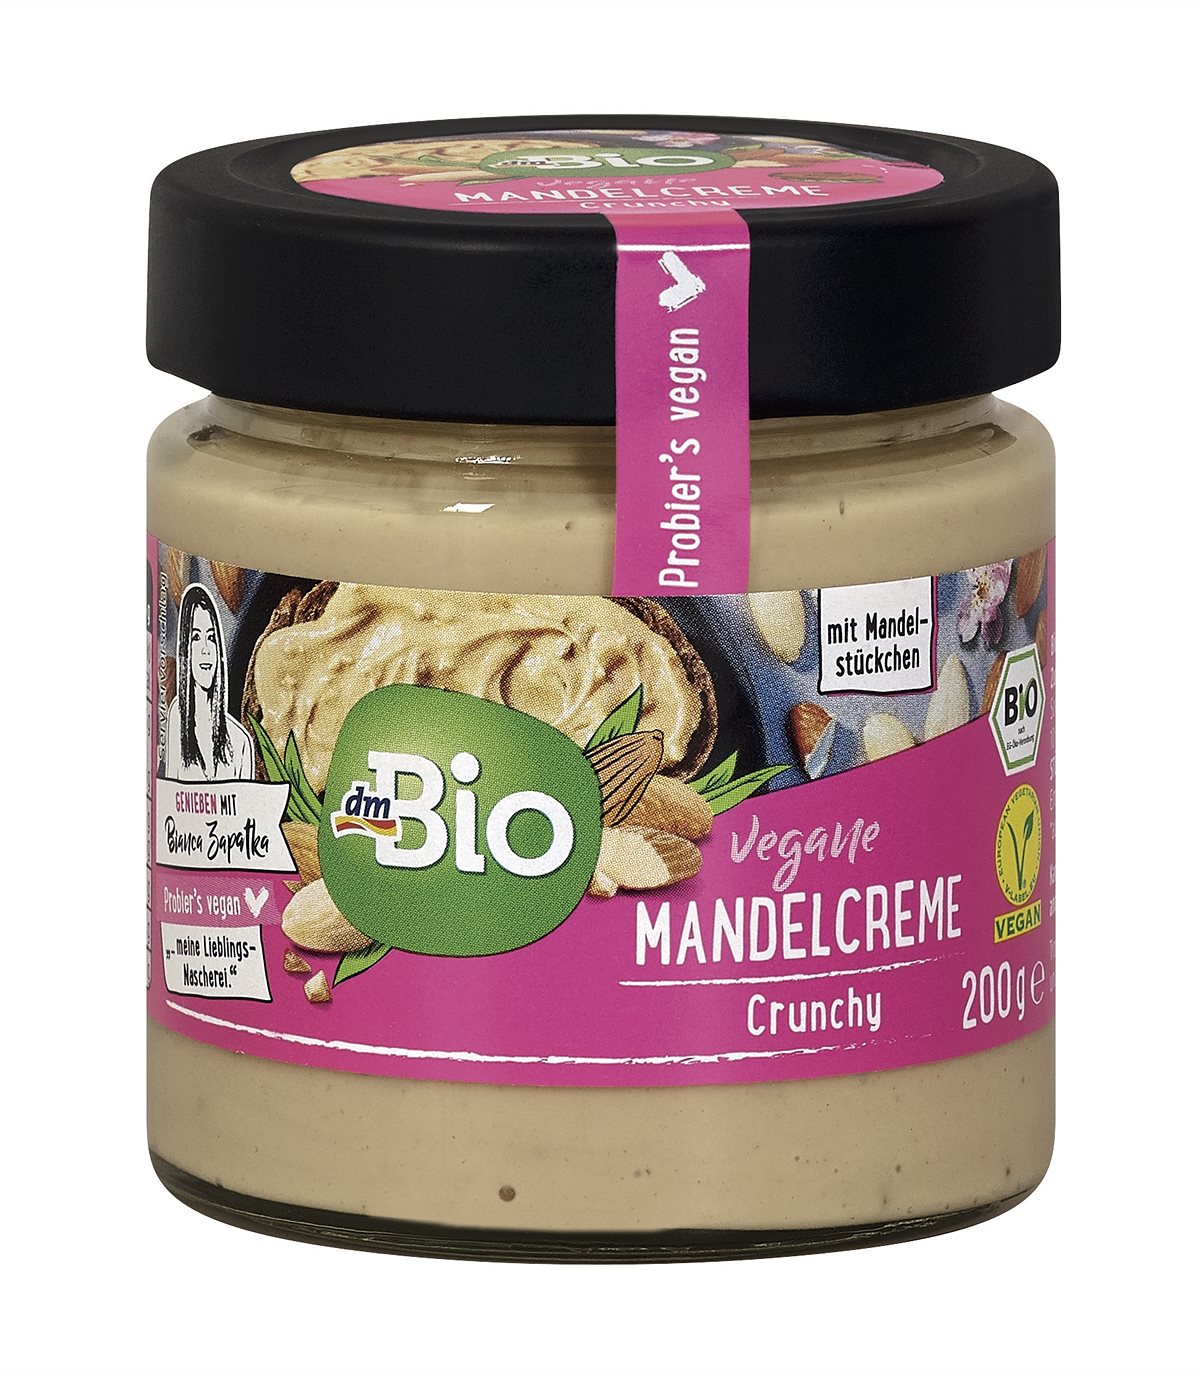 dmBio Vegane Mandelcreme Crunchy 200g 3,95 Euro